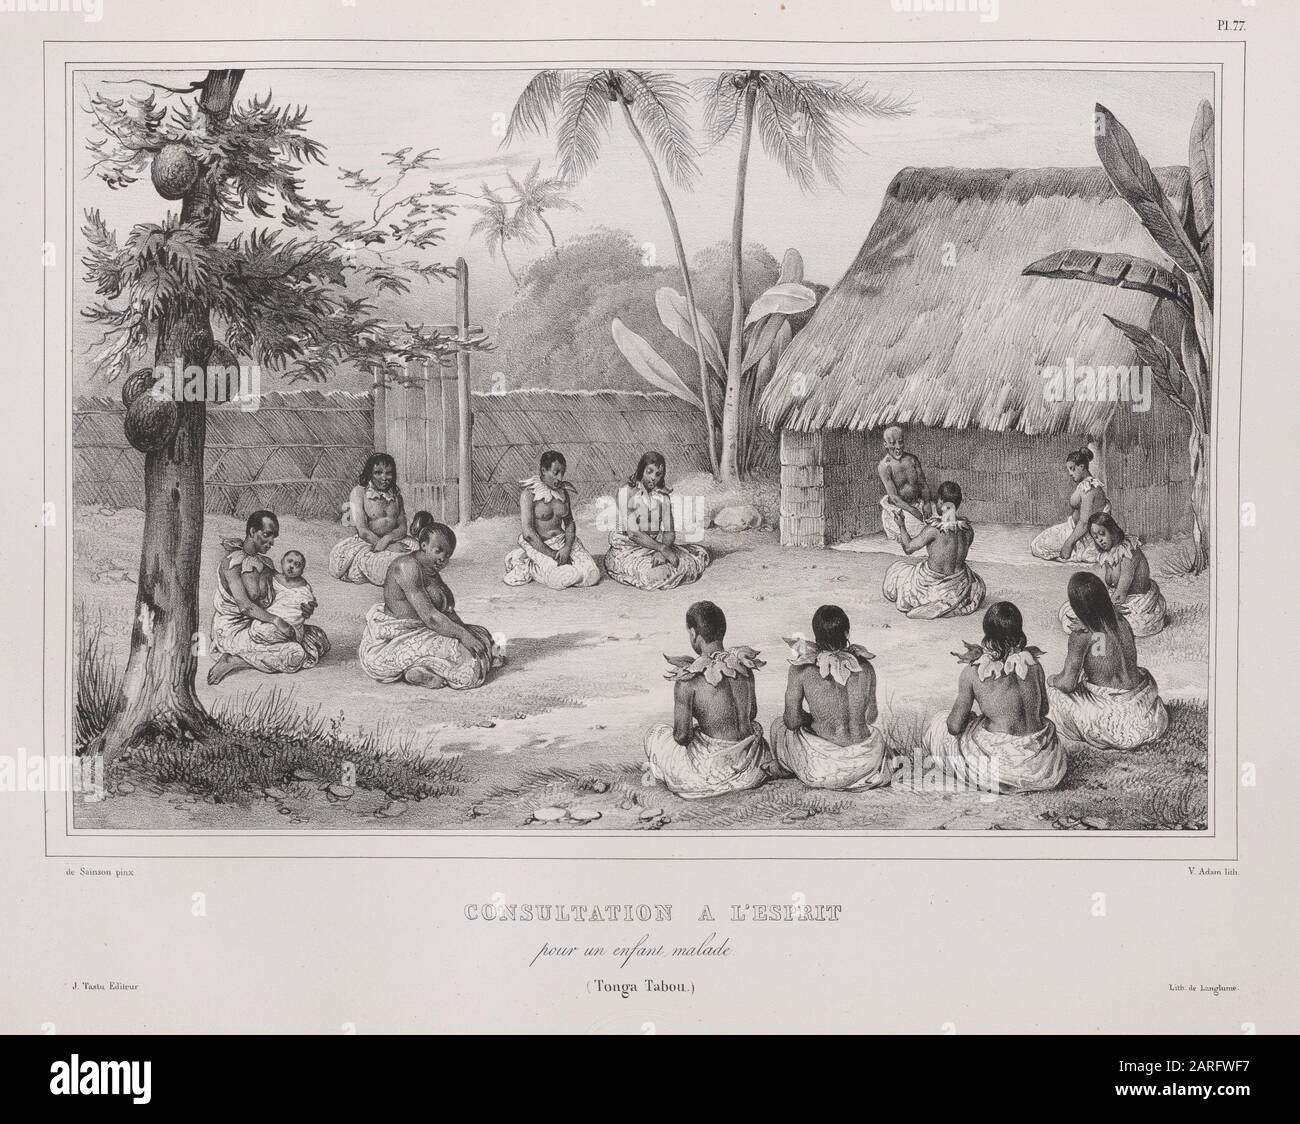 Consugtation in mind. for a sick child. (Tonga Taboo.). Dumont d'Urville,  Jules-Sébastien-César (1790-1842) (Author). Voyage of the corvette the  Stock Photo - Alamy